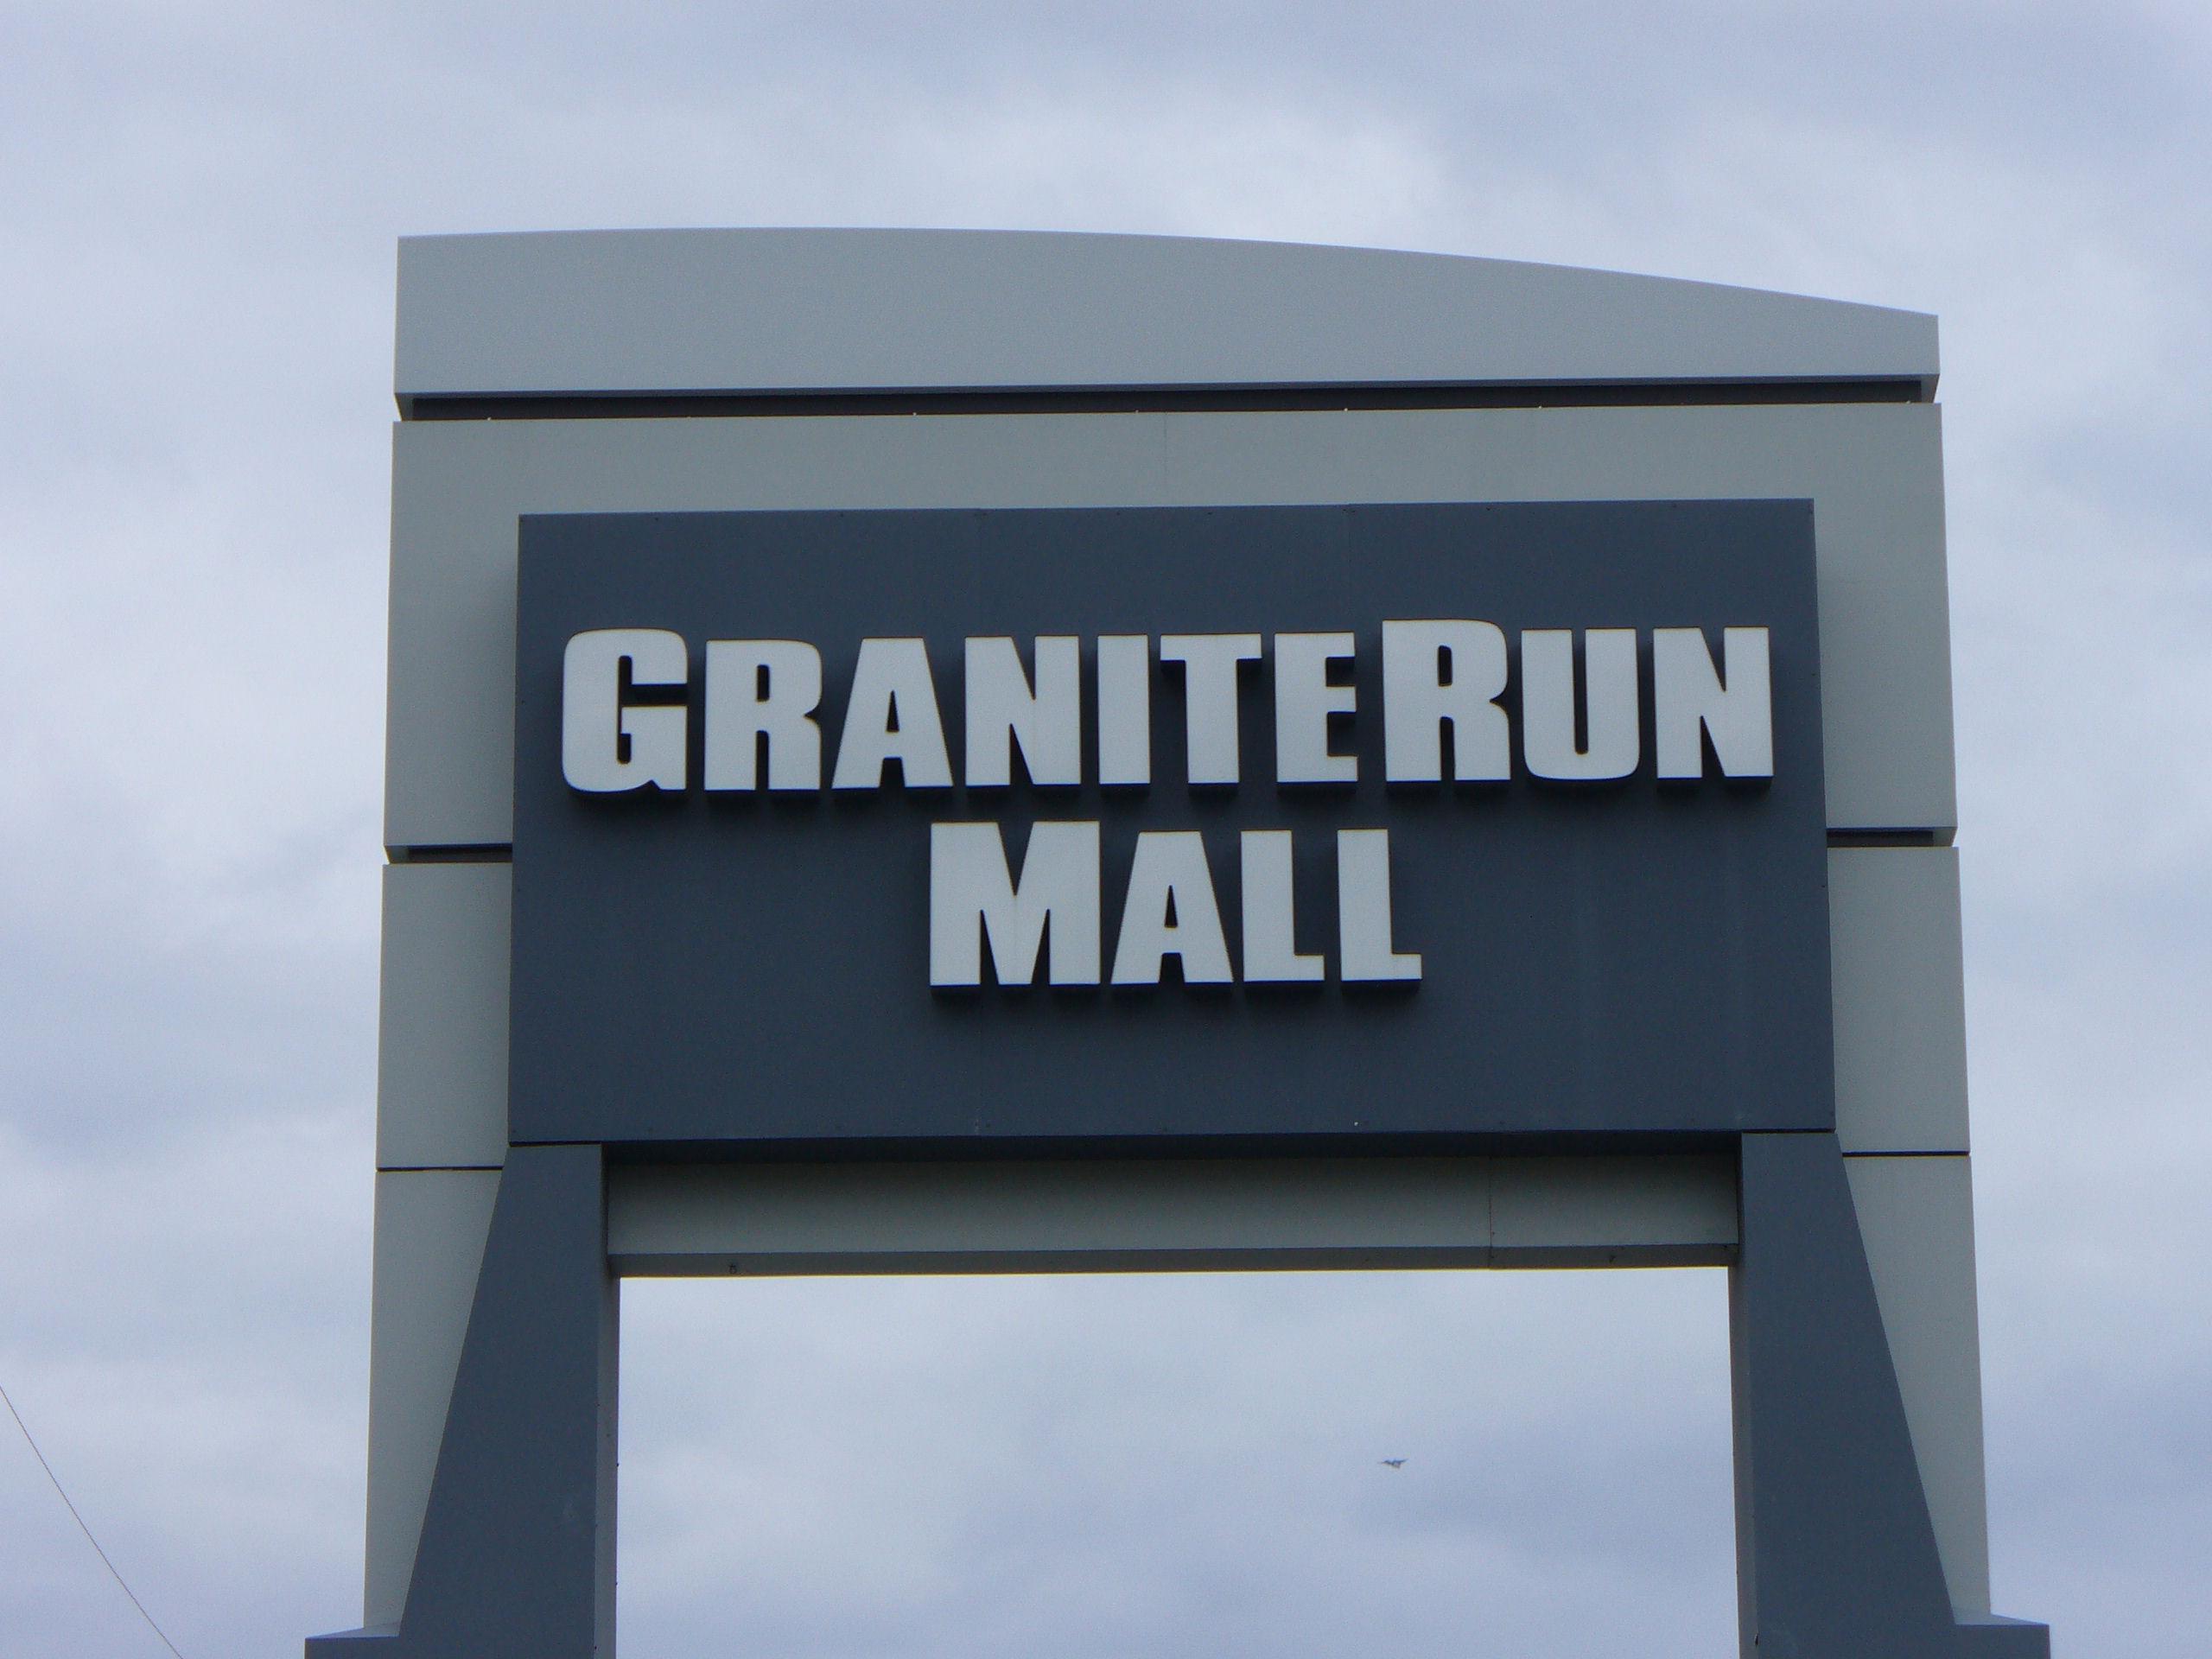 Granite Run Mall Getting a Whole New Look